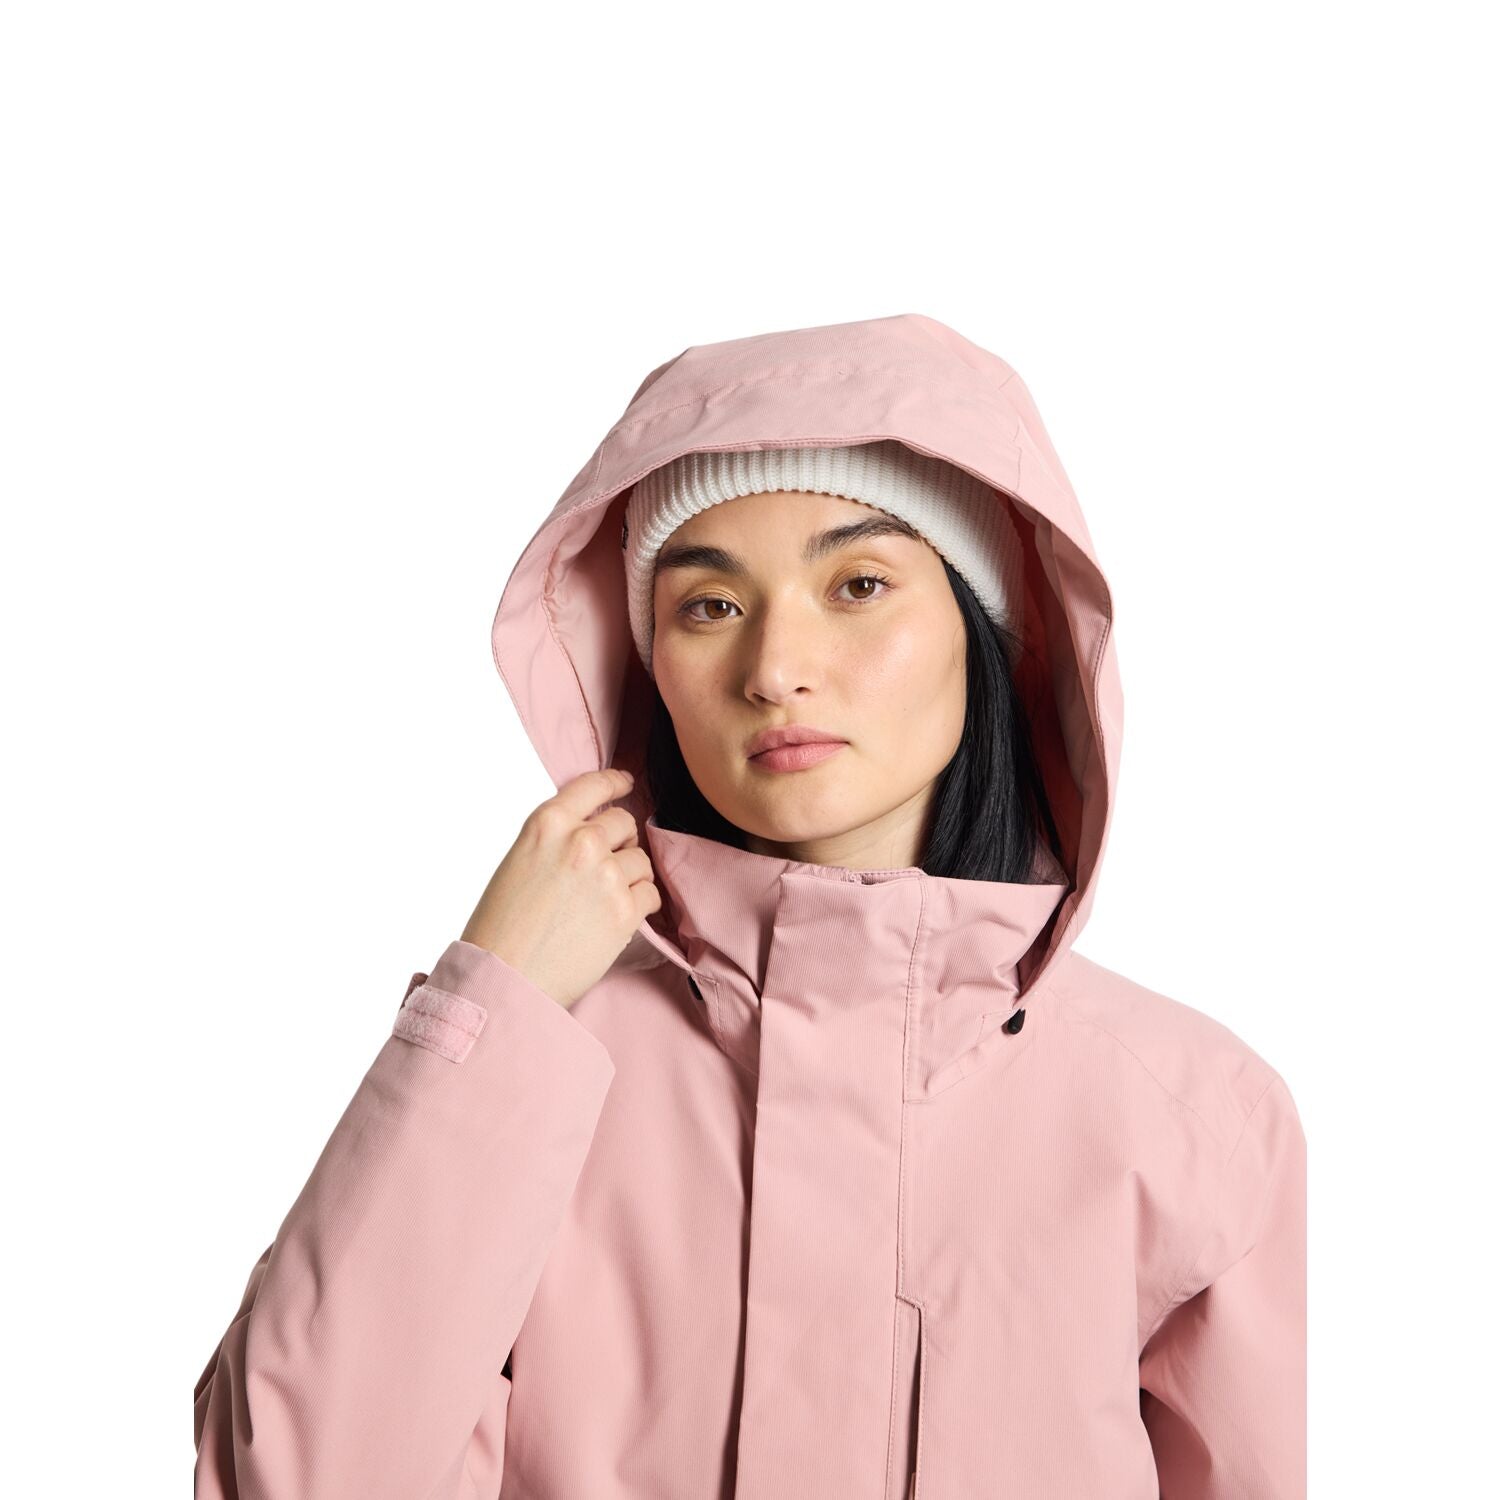 Nils Womens Hooded Full Zipper Rain Jacket Pink Size 2 - Shop